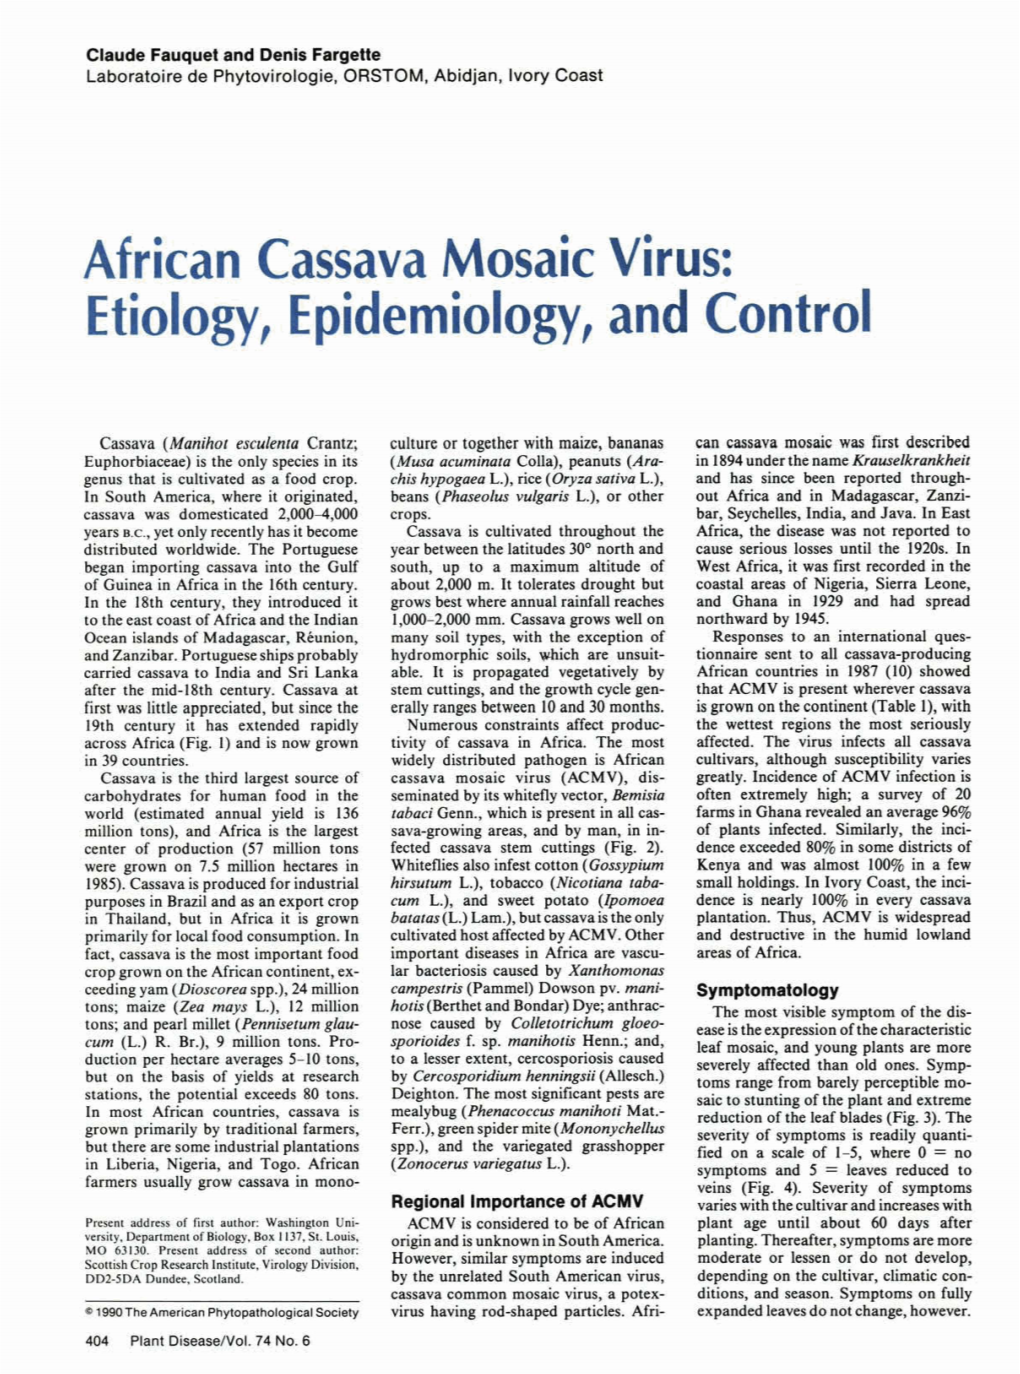 African Cassava Mosaic Virus: Etiology, Epidemiology, and Control